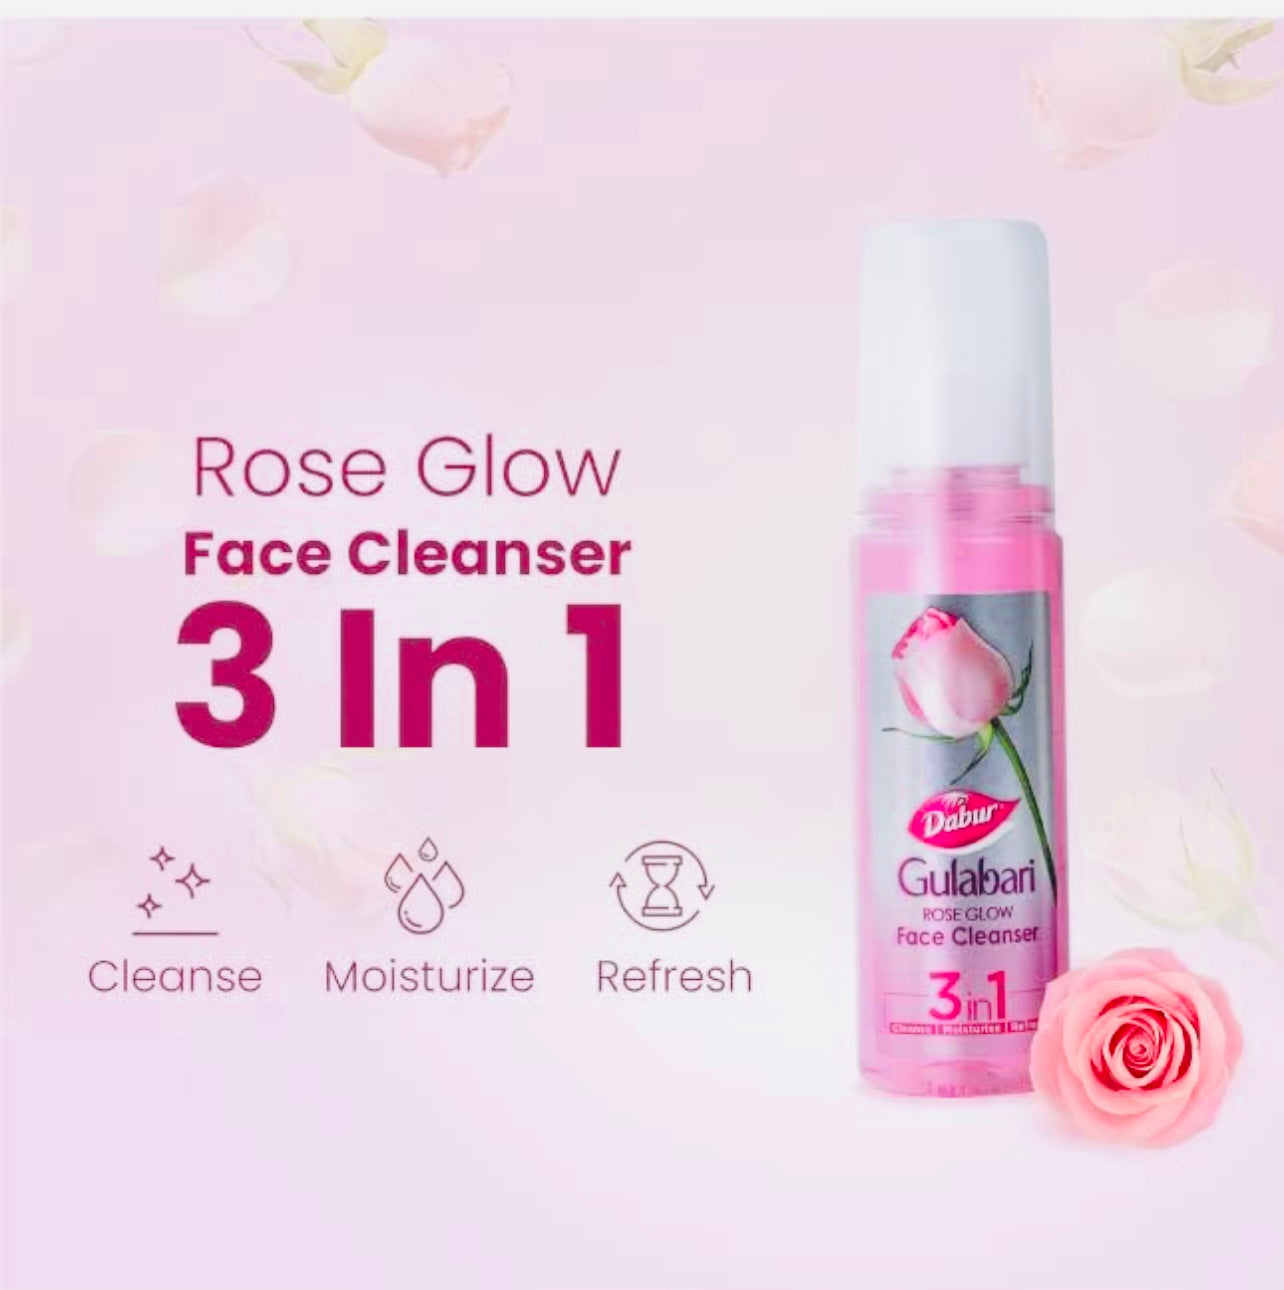 Dabur Gulabari Rose Glow Face Cleanser - 100ml | For All Skin Types | Cleaner, Balanced & Hydrated Skin